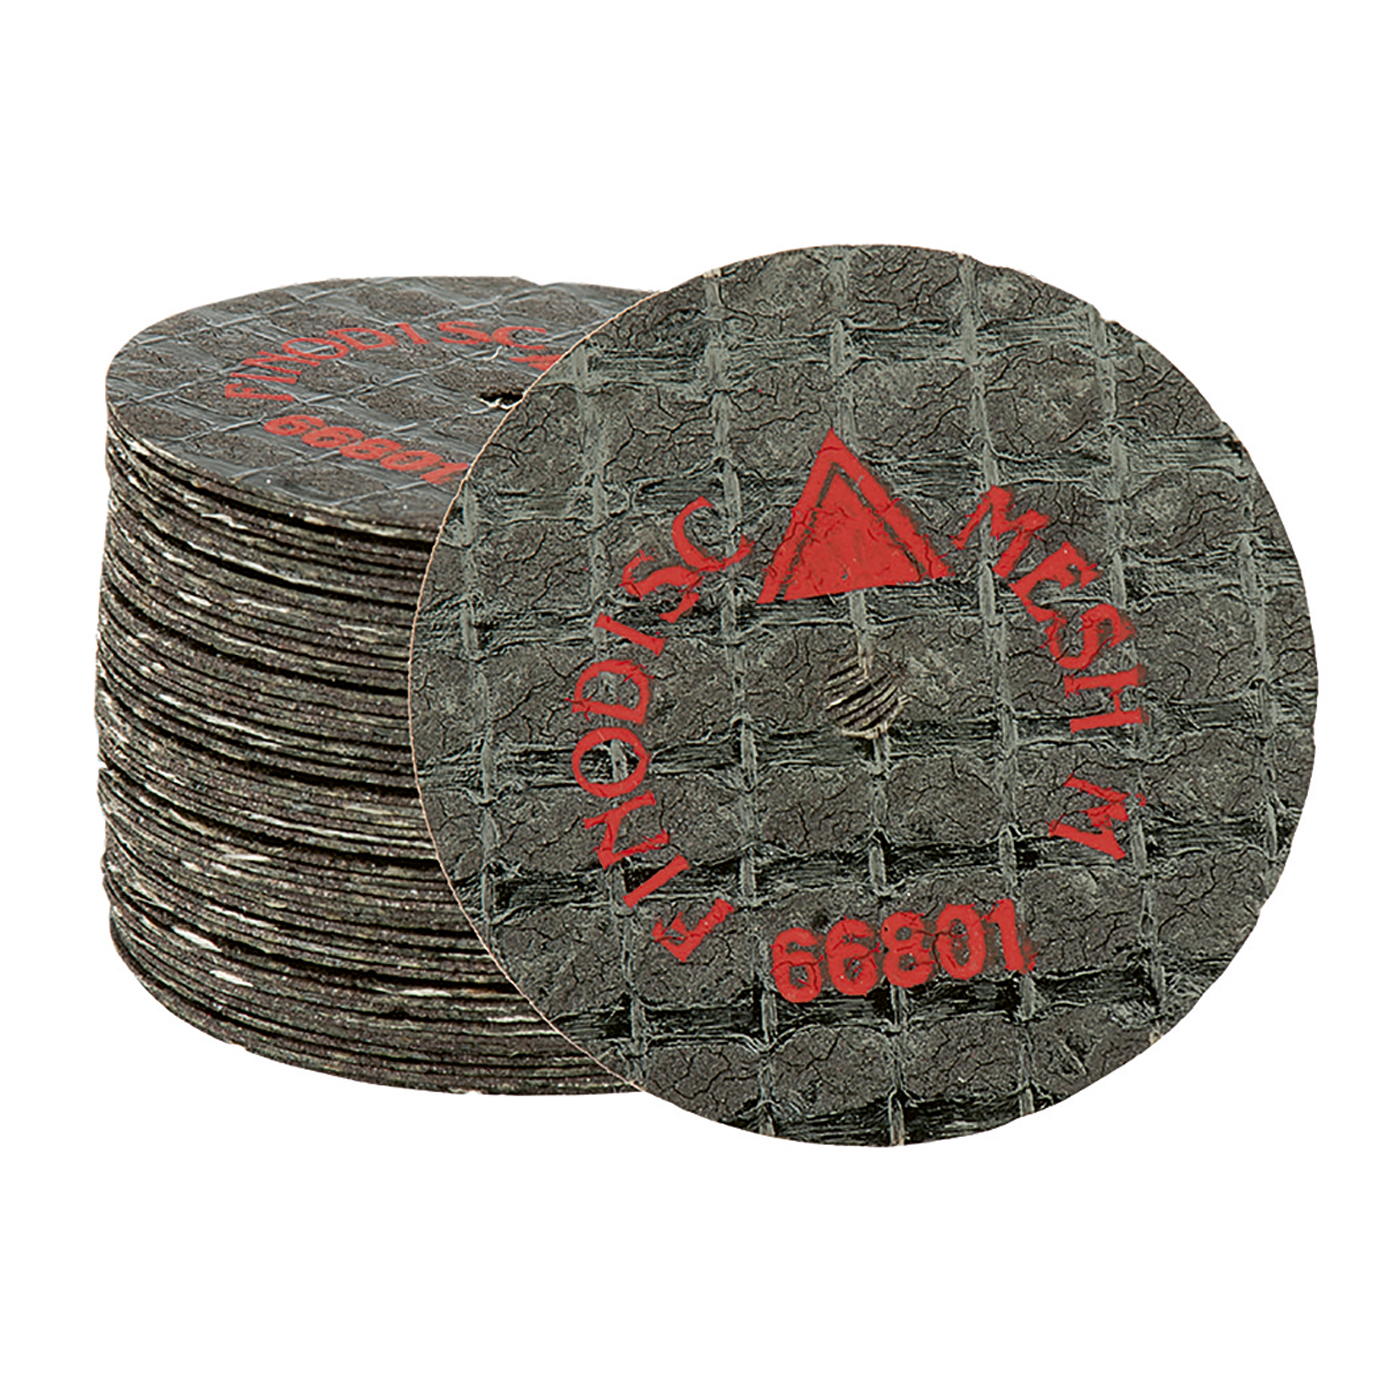 FINODISC MESH M Separating Discs, ø 22 x 0.2 mm - 50 pieces